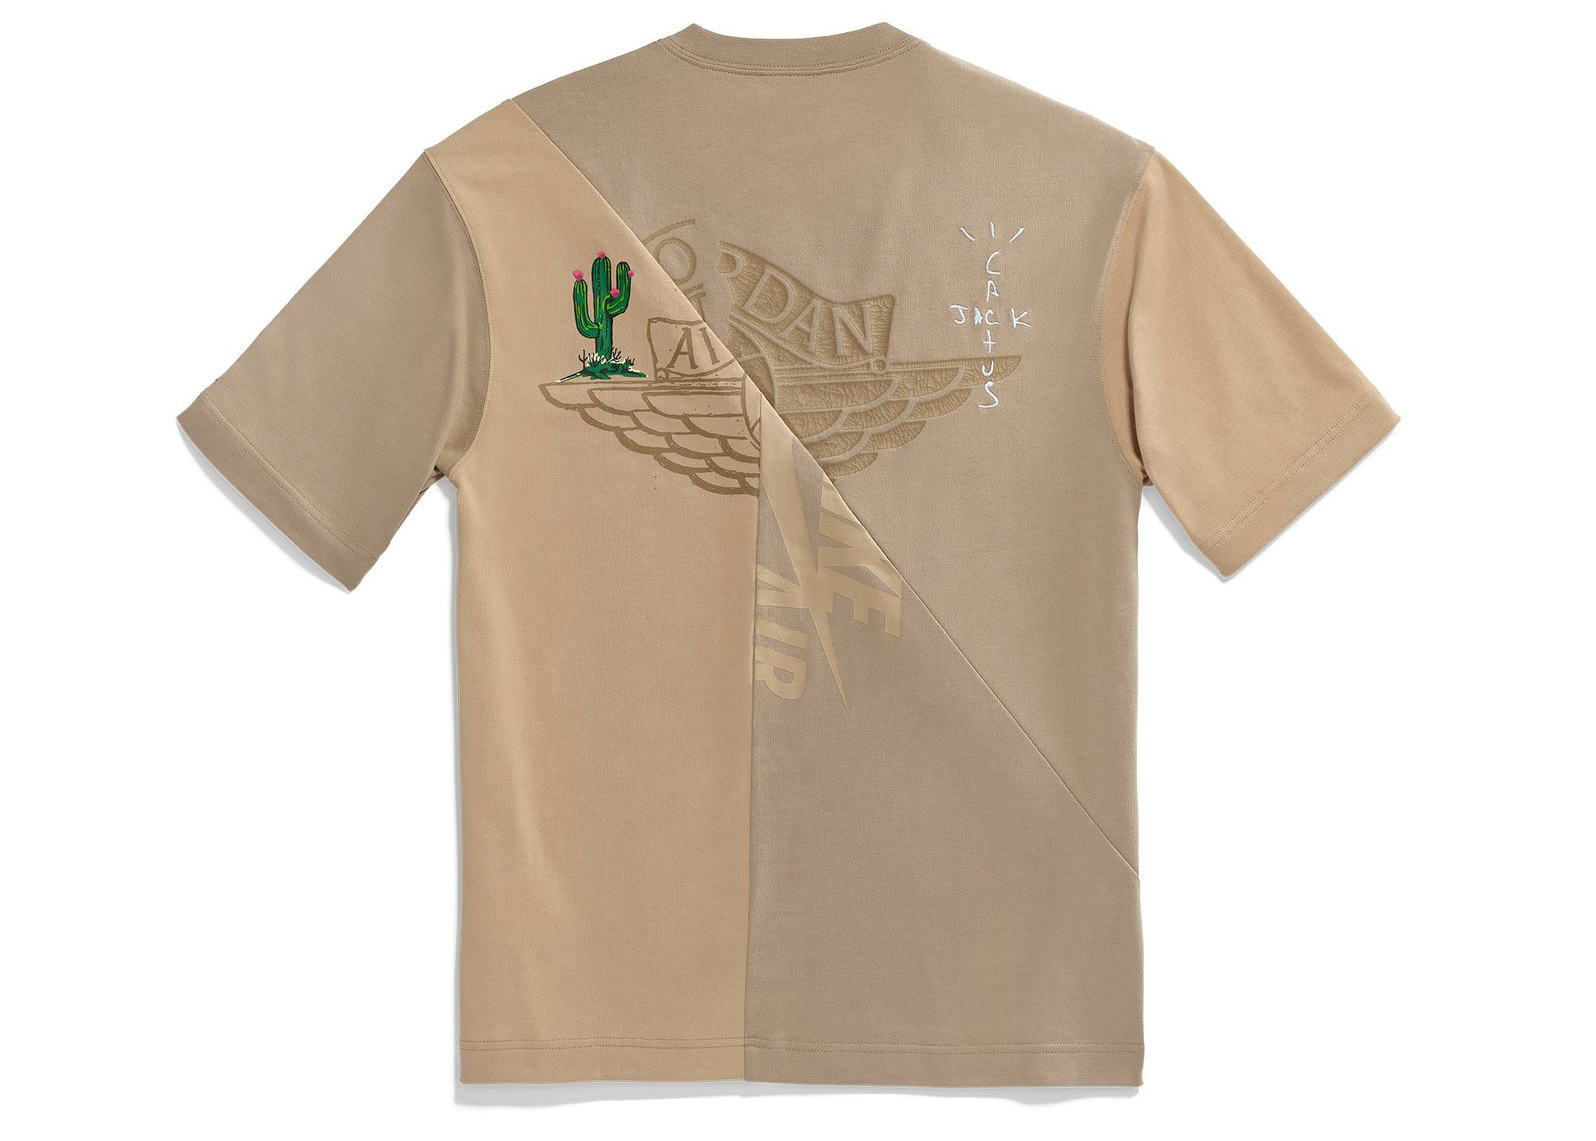 Travis Scott Cactus Jack x Jordan T-shirt (Asia Sizing